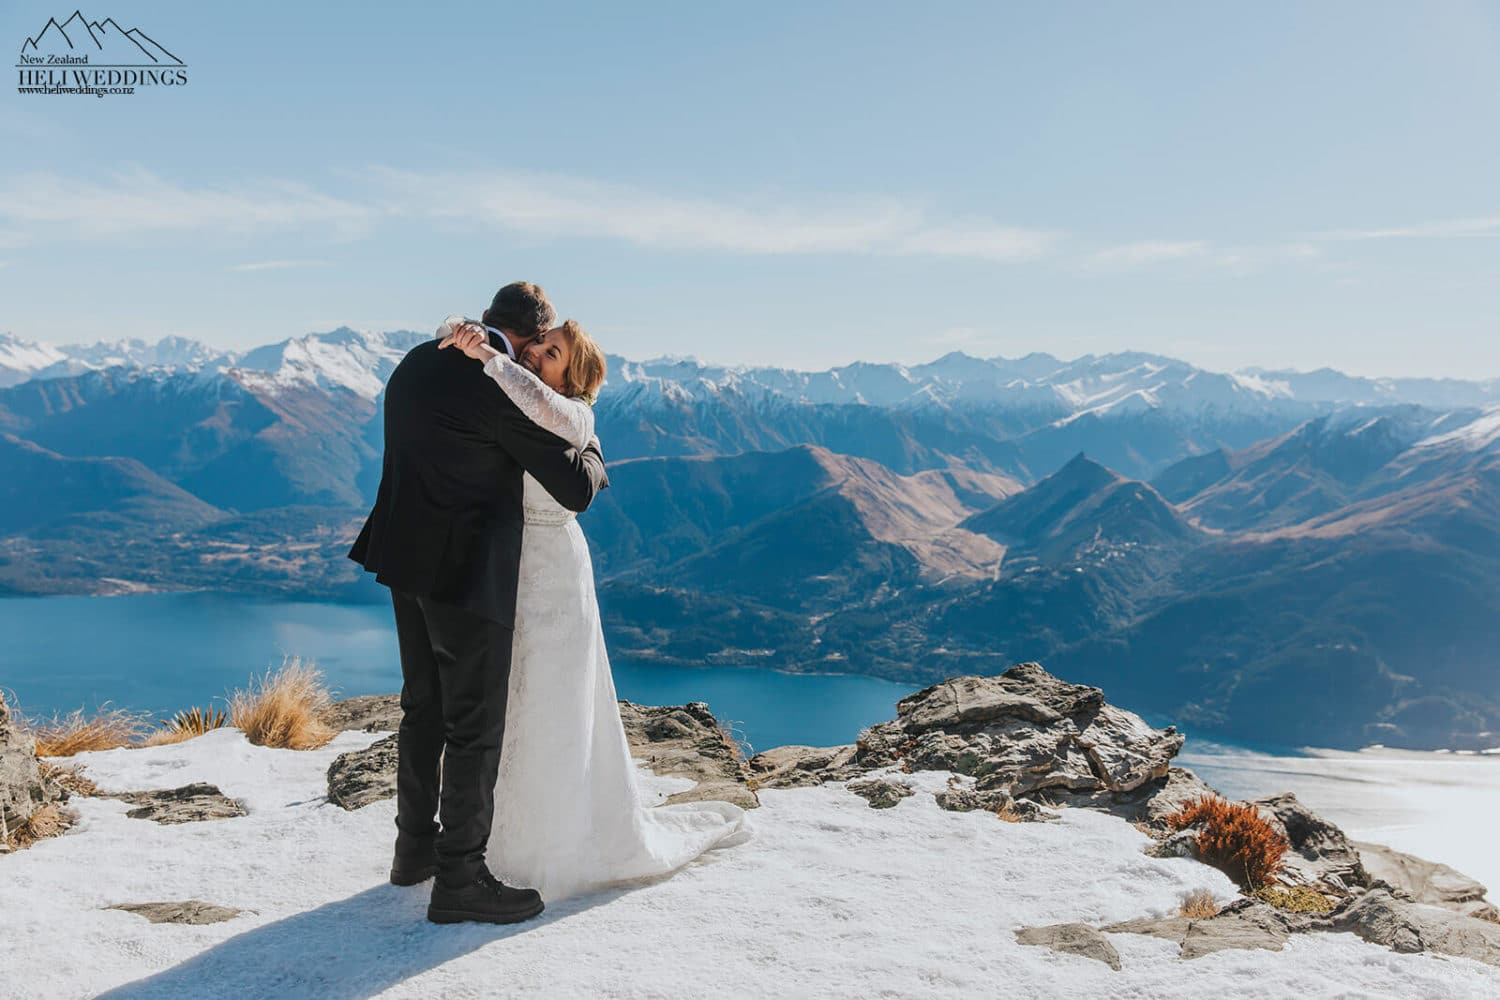 NZ Winter Wedding,Mountain wedding ceremony in the snow, Queenstown Wedding